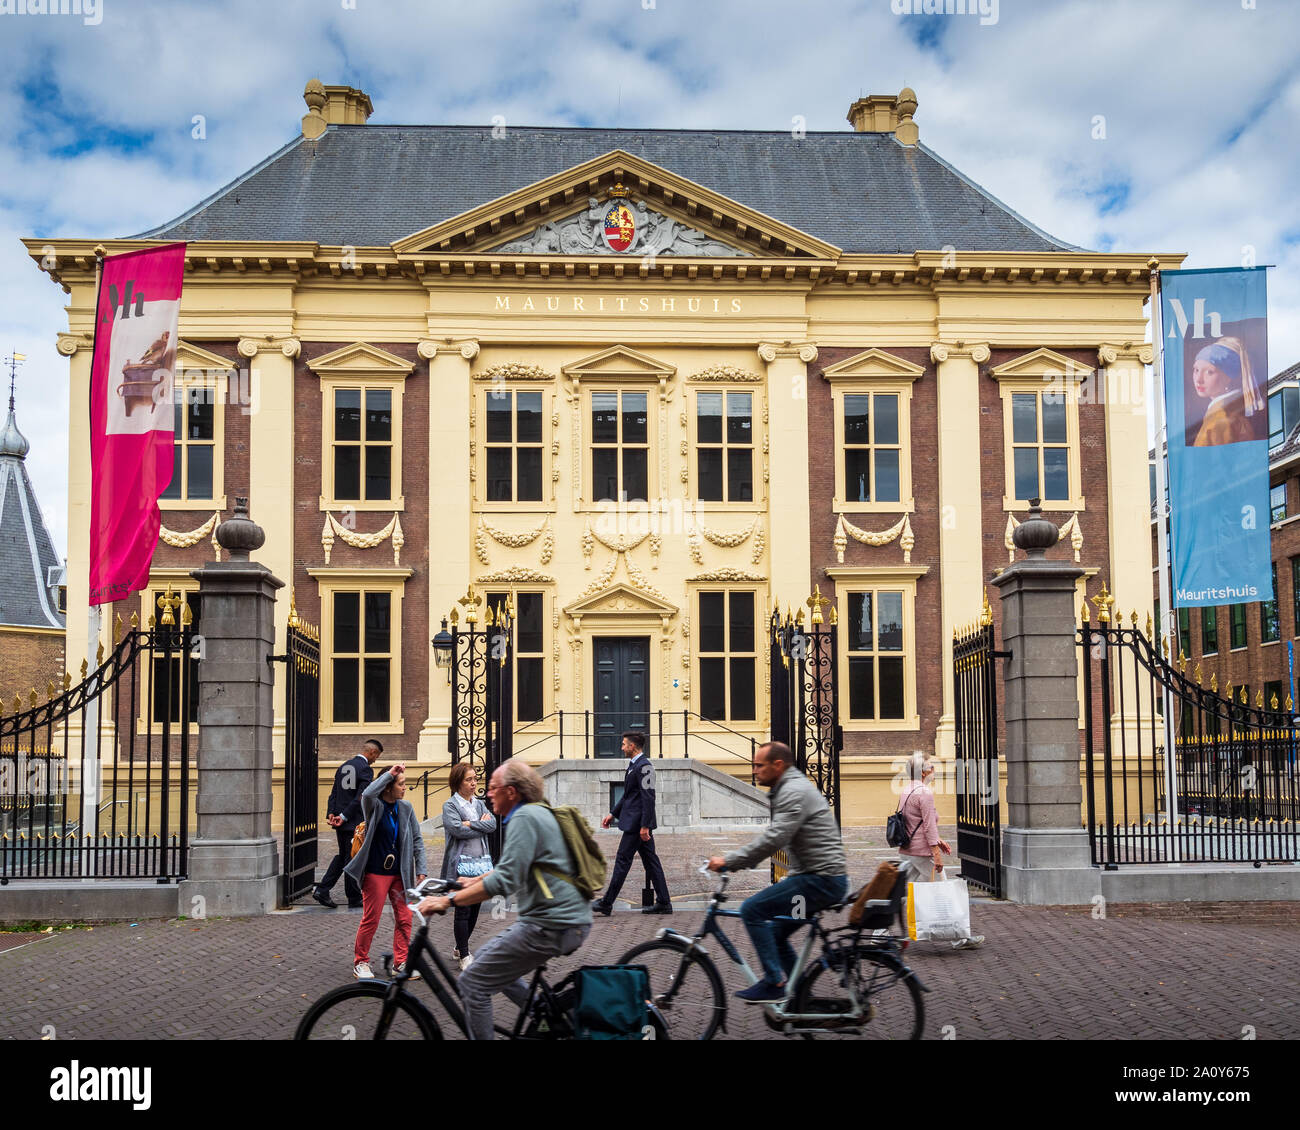 Den Haag Mauritshuis de La Haye, Mauritshuis C 17ème art gallery spécialisée dans l'âge d'or hollandais y compris peintures Vermeer Girl with a Pearl Earring Banque D'Images